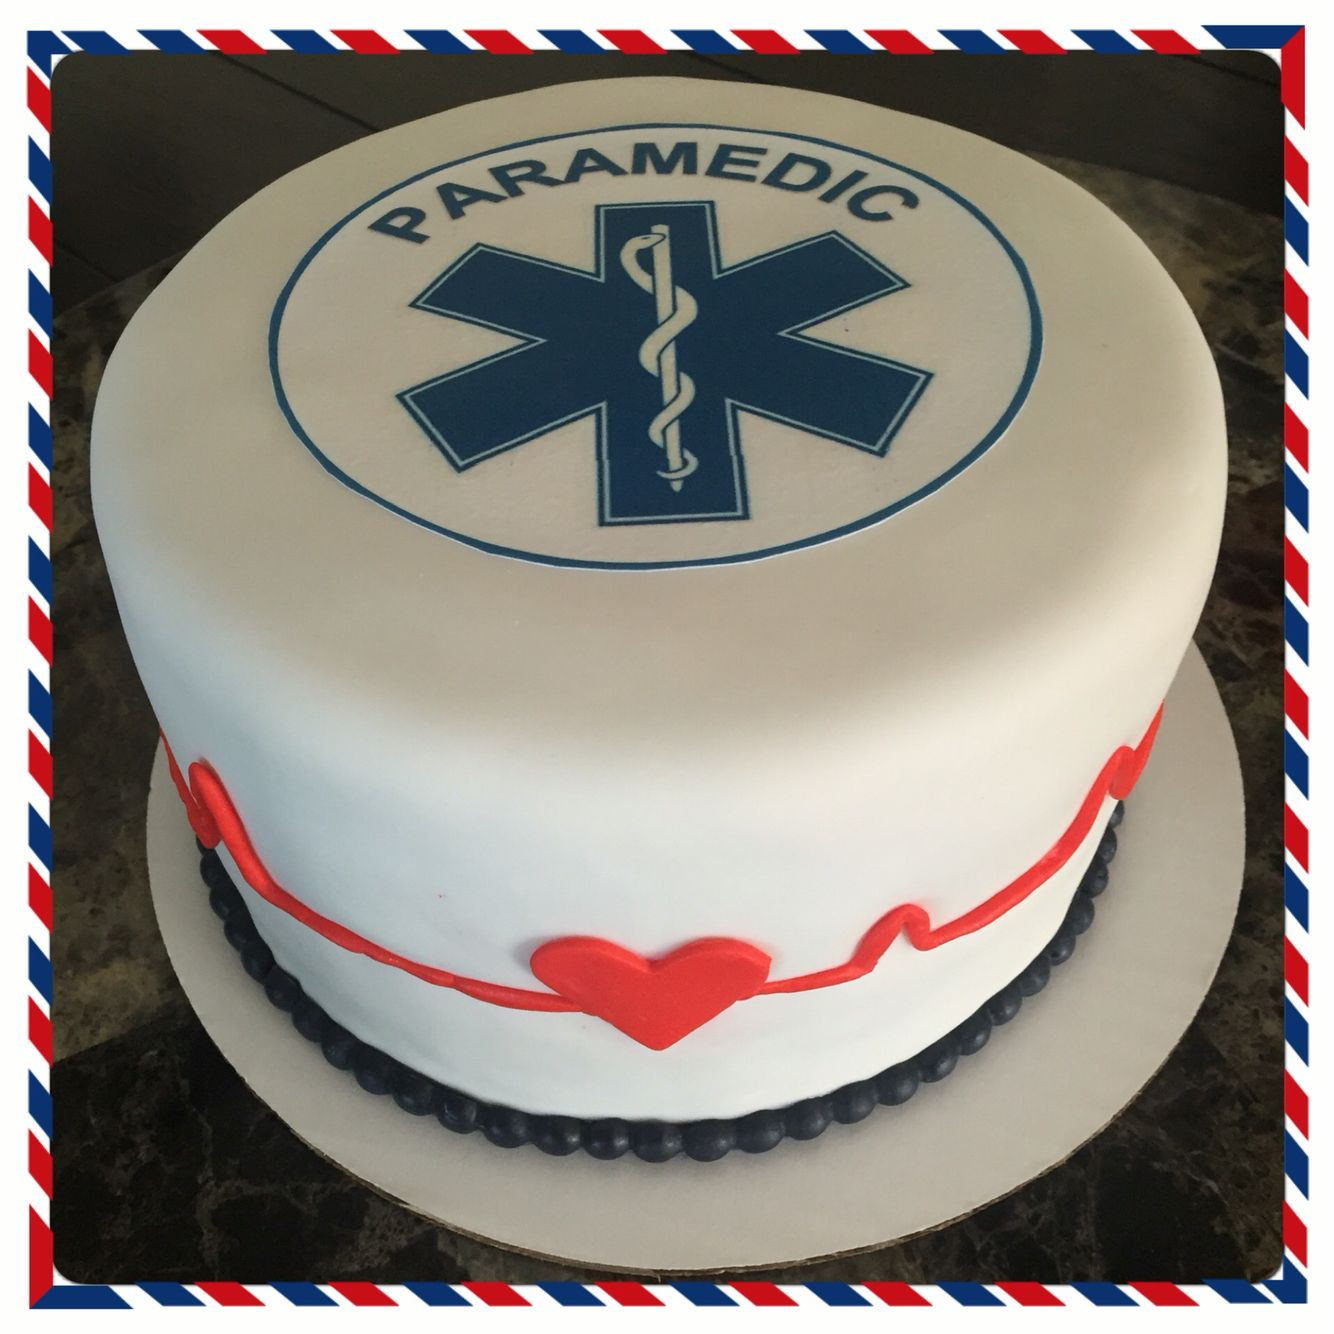 Paramedic Graduation Party Ideas
 Paramedic school graduation Cake